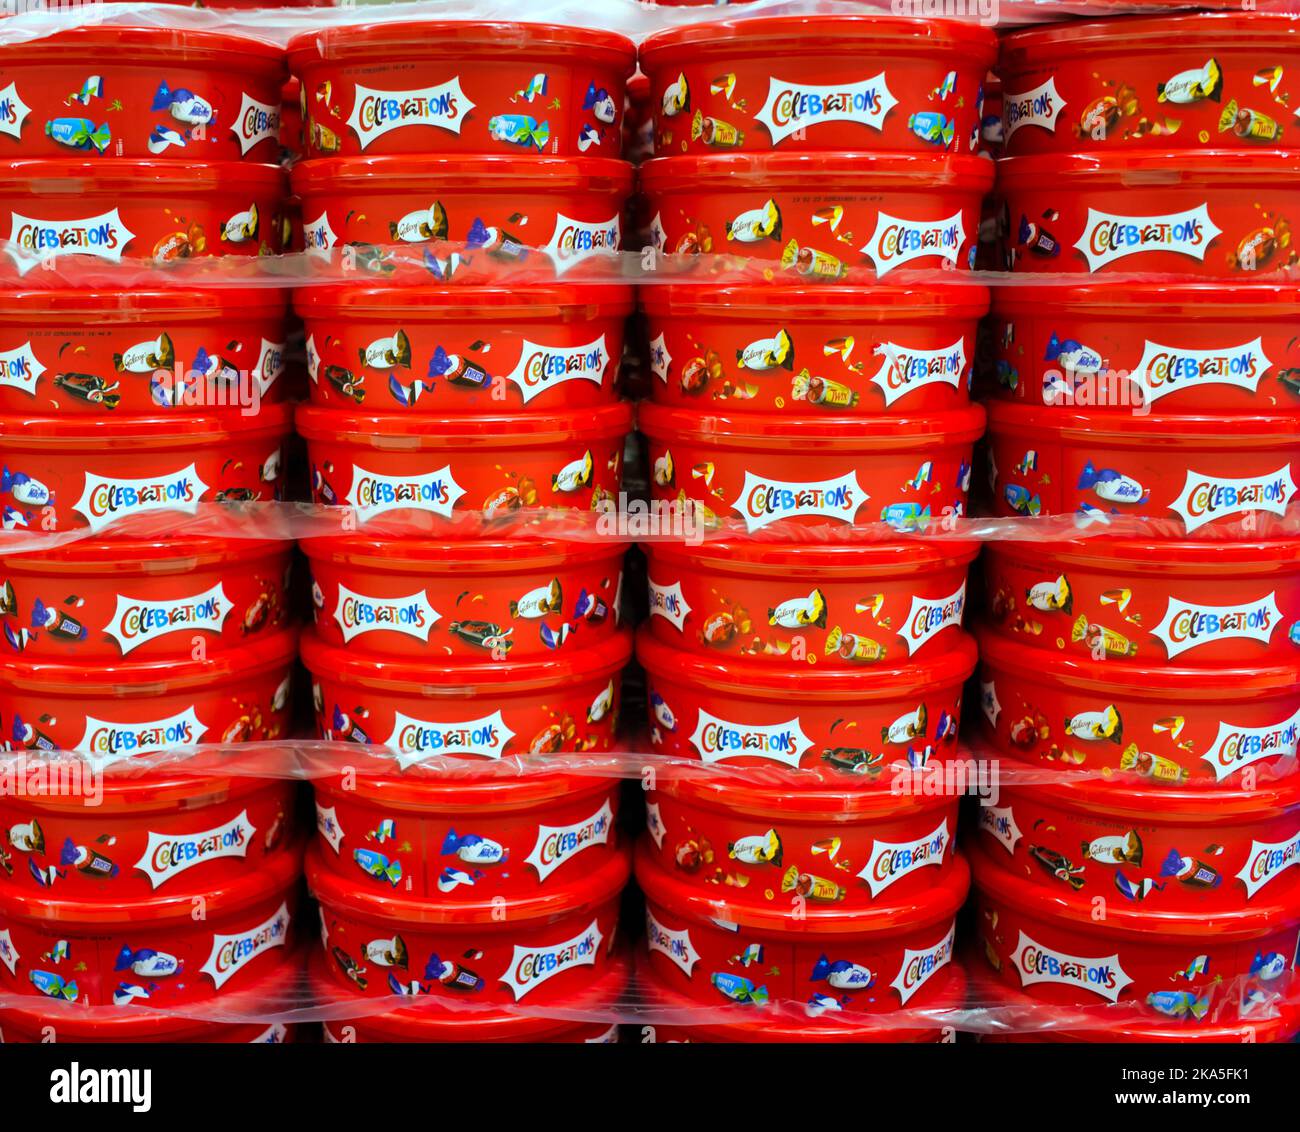 celebrations tins in supermarket piles Stock Photo